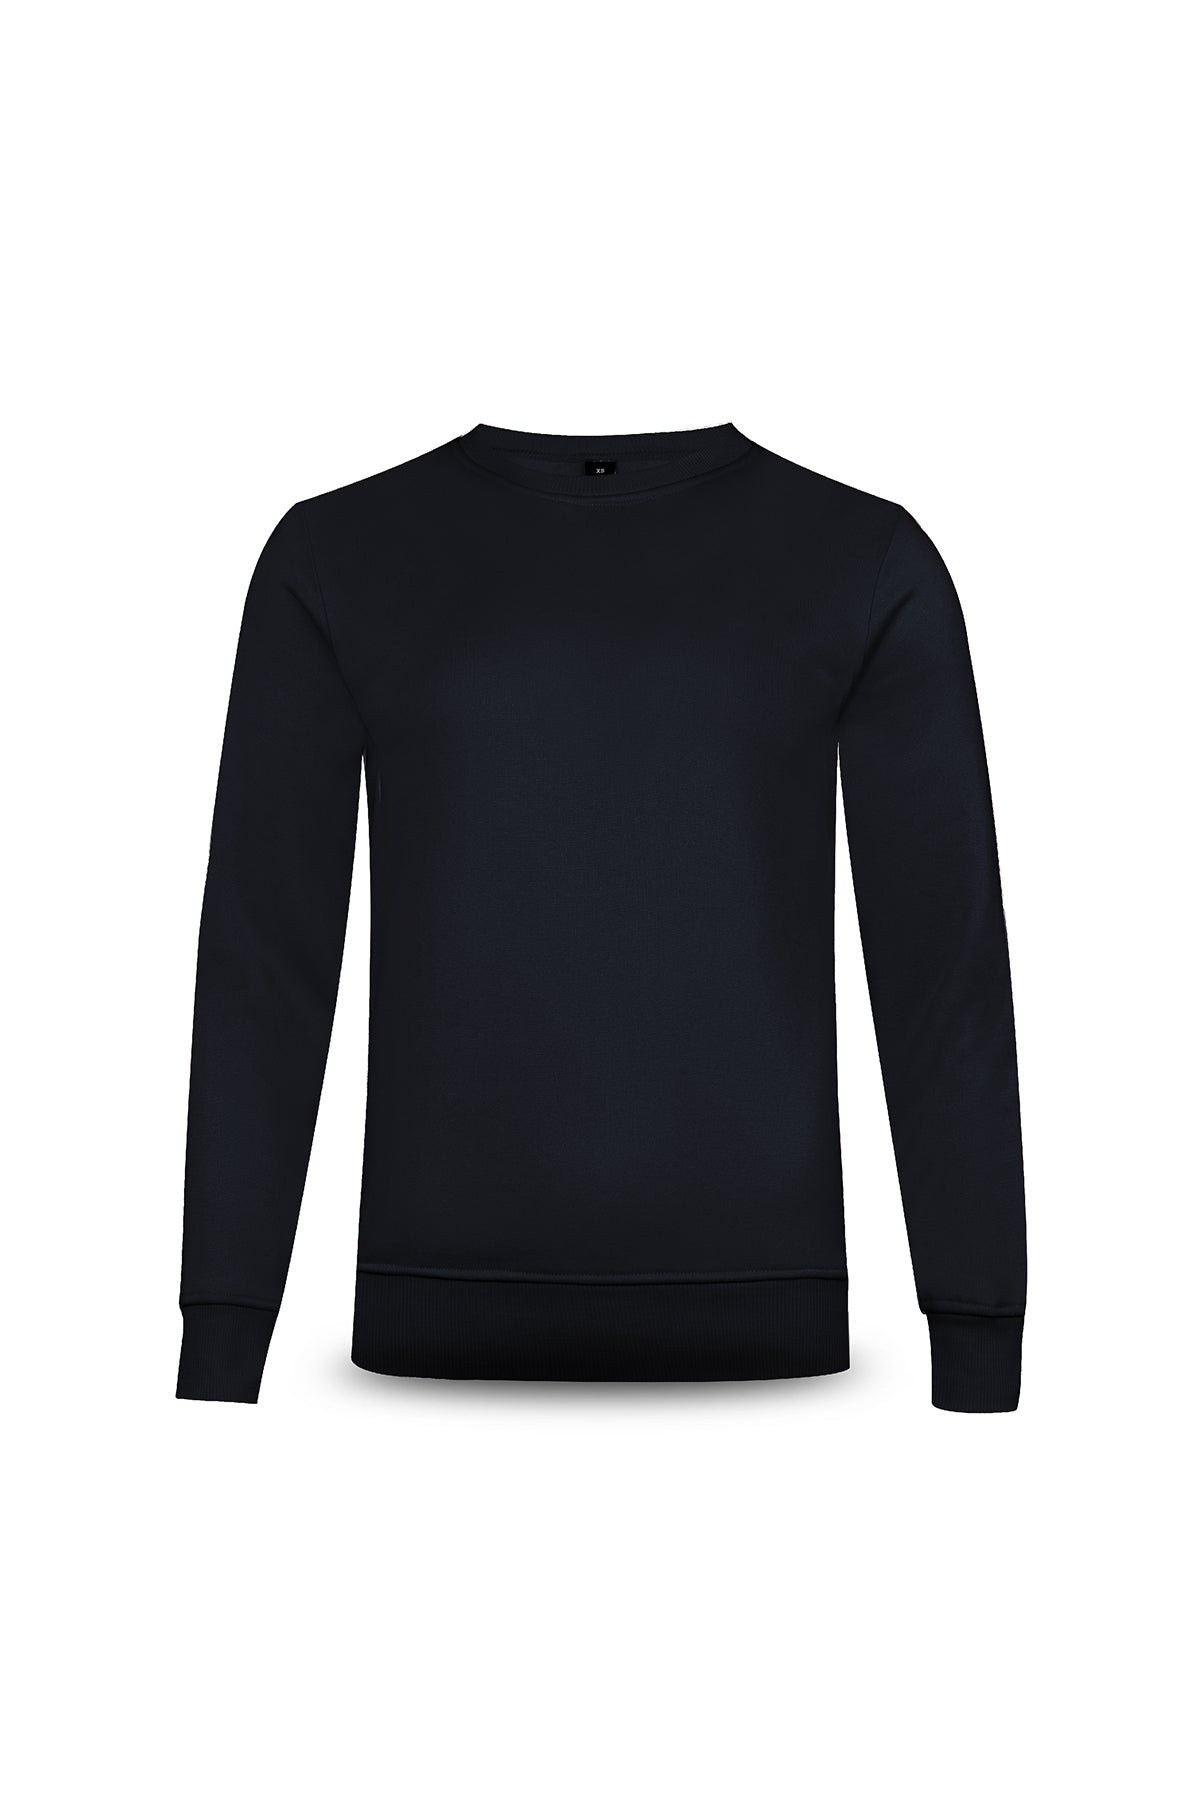 Beam Long Sleeve Sweat Shirt Black